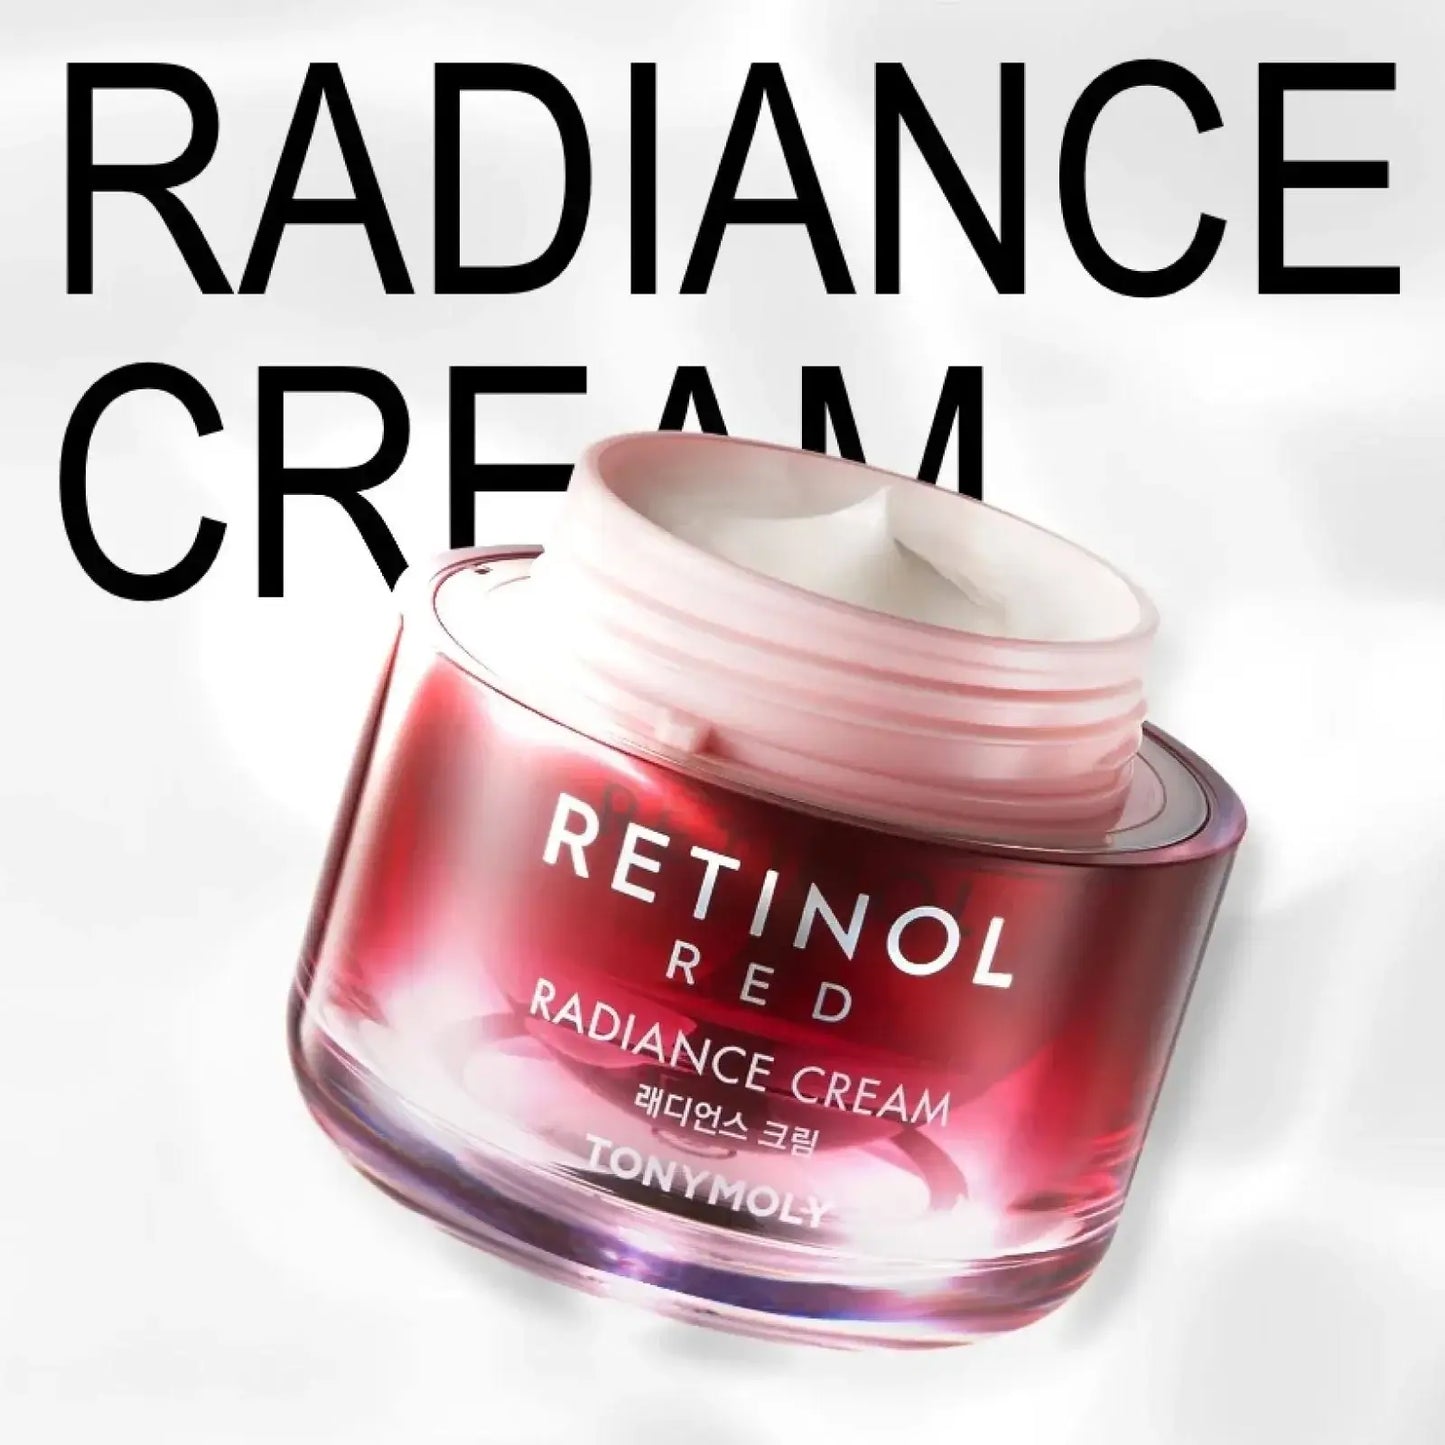 TONYMOLY Retinol Red Radiance Cream